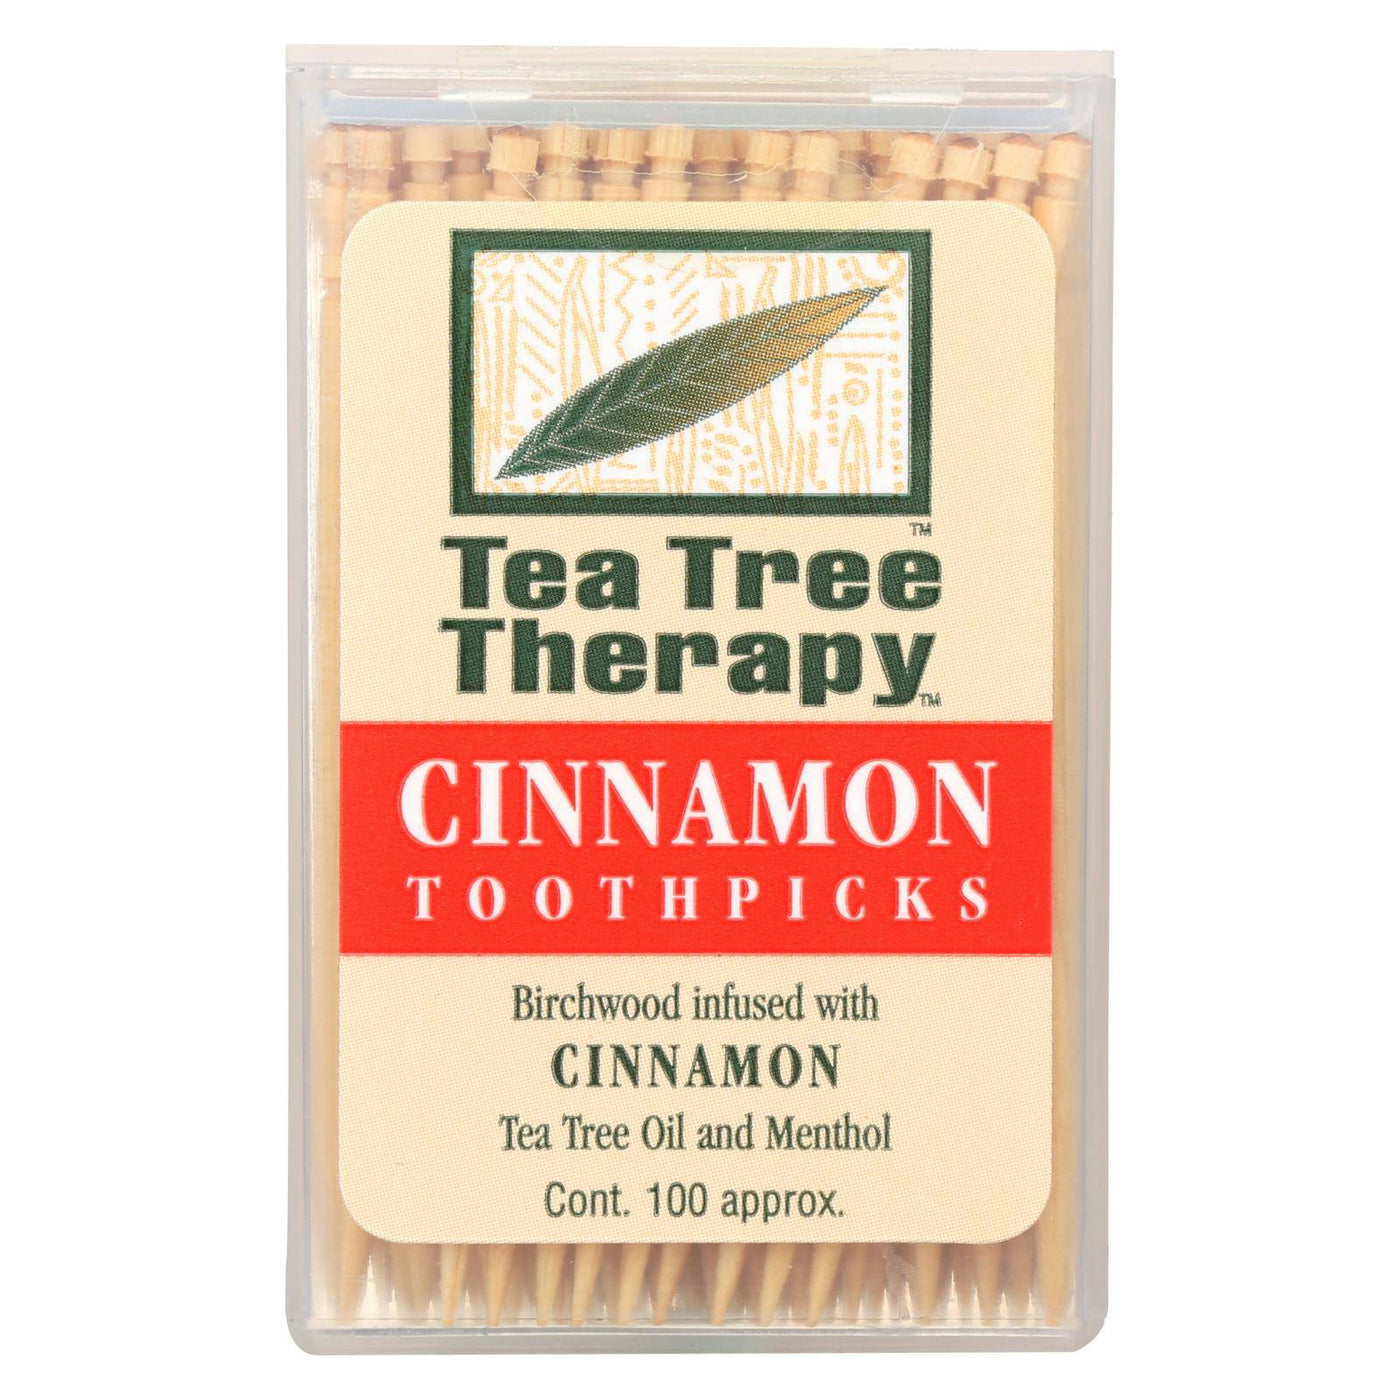 Tea Tree Therapy Toothpicks Cinnamon - 100 Toothpicks - Case Of 12 | OnlyNaturals.us